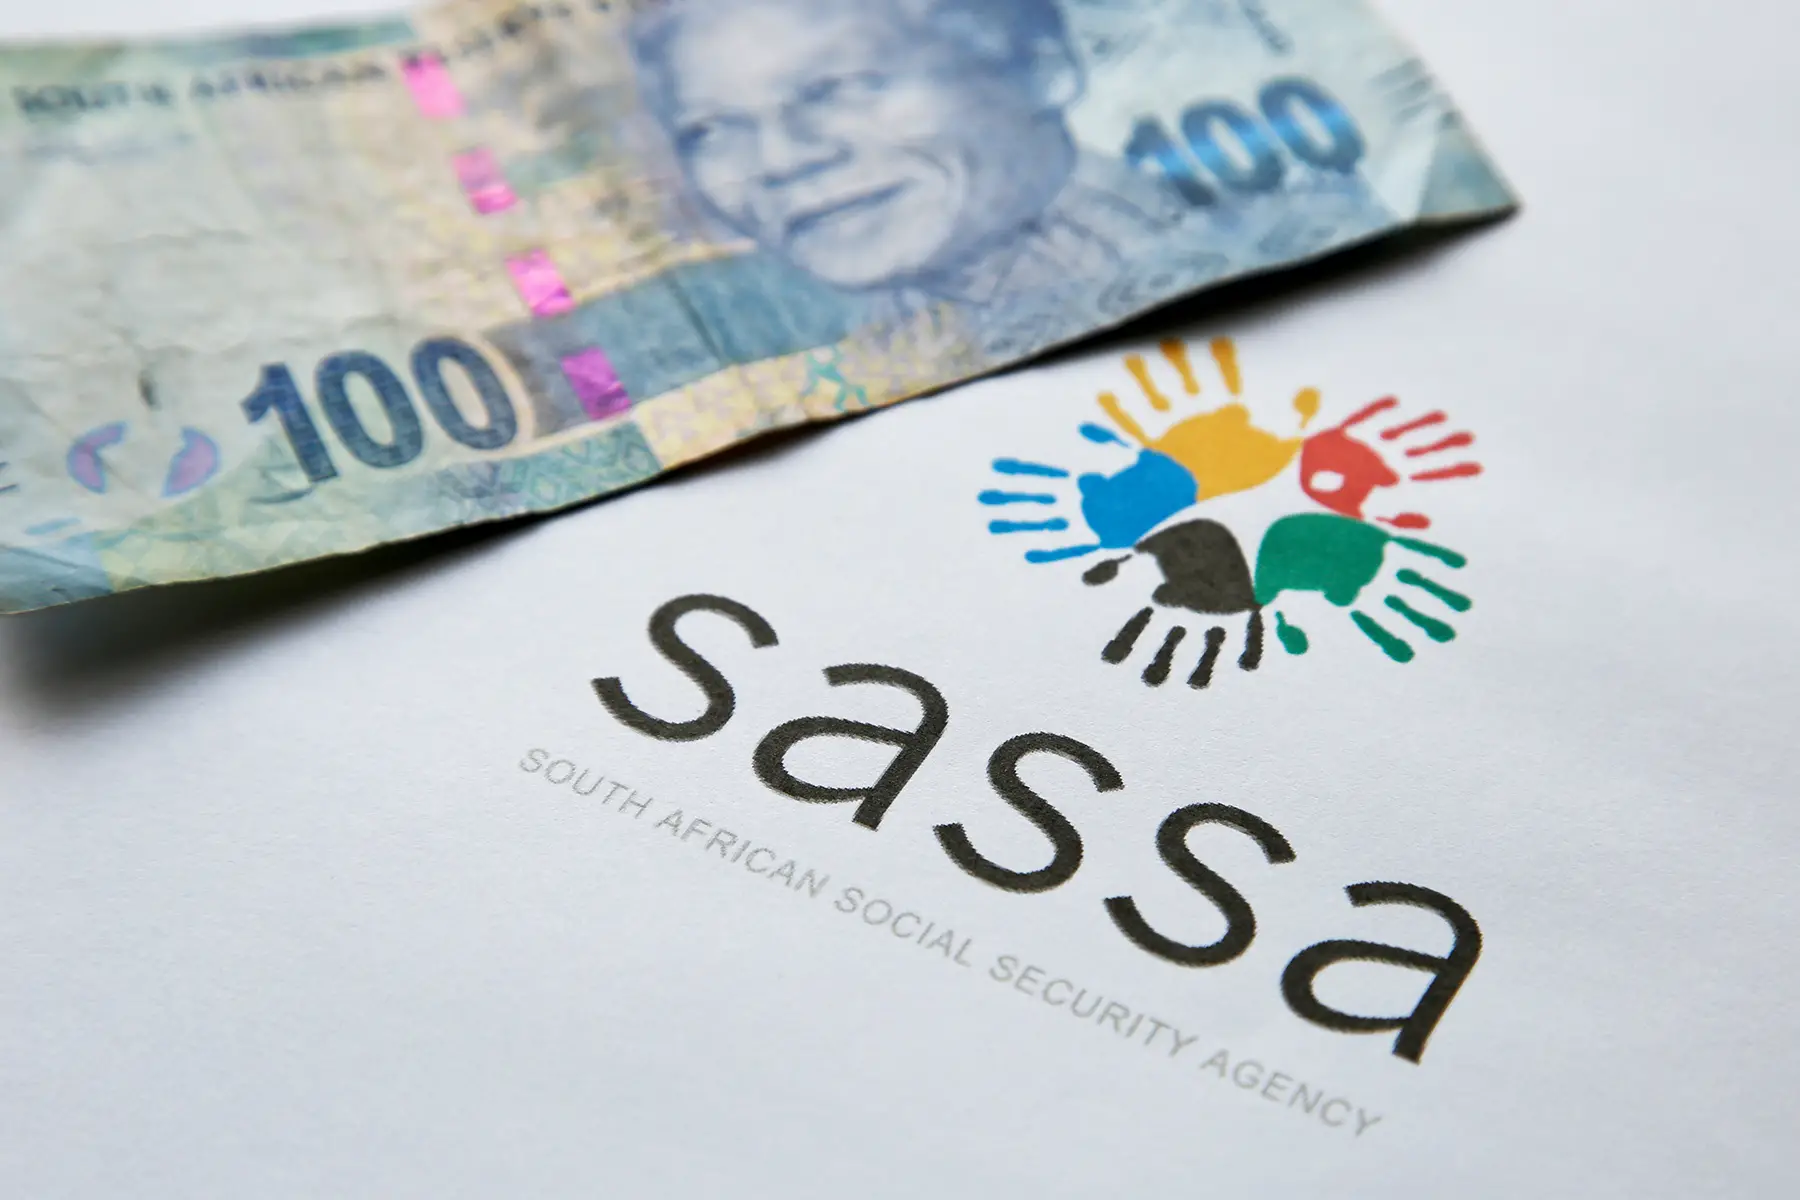 The SASSA logo